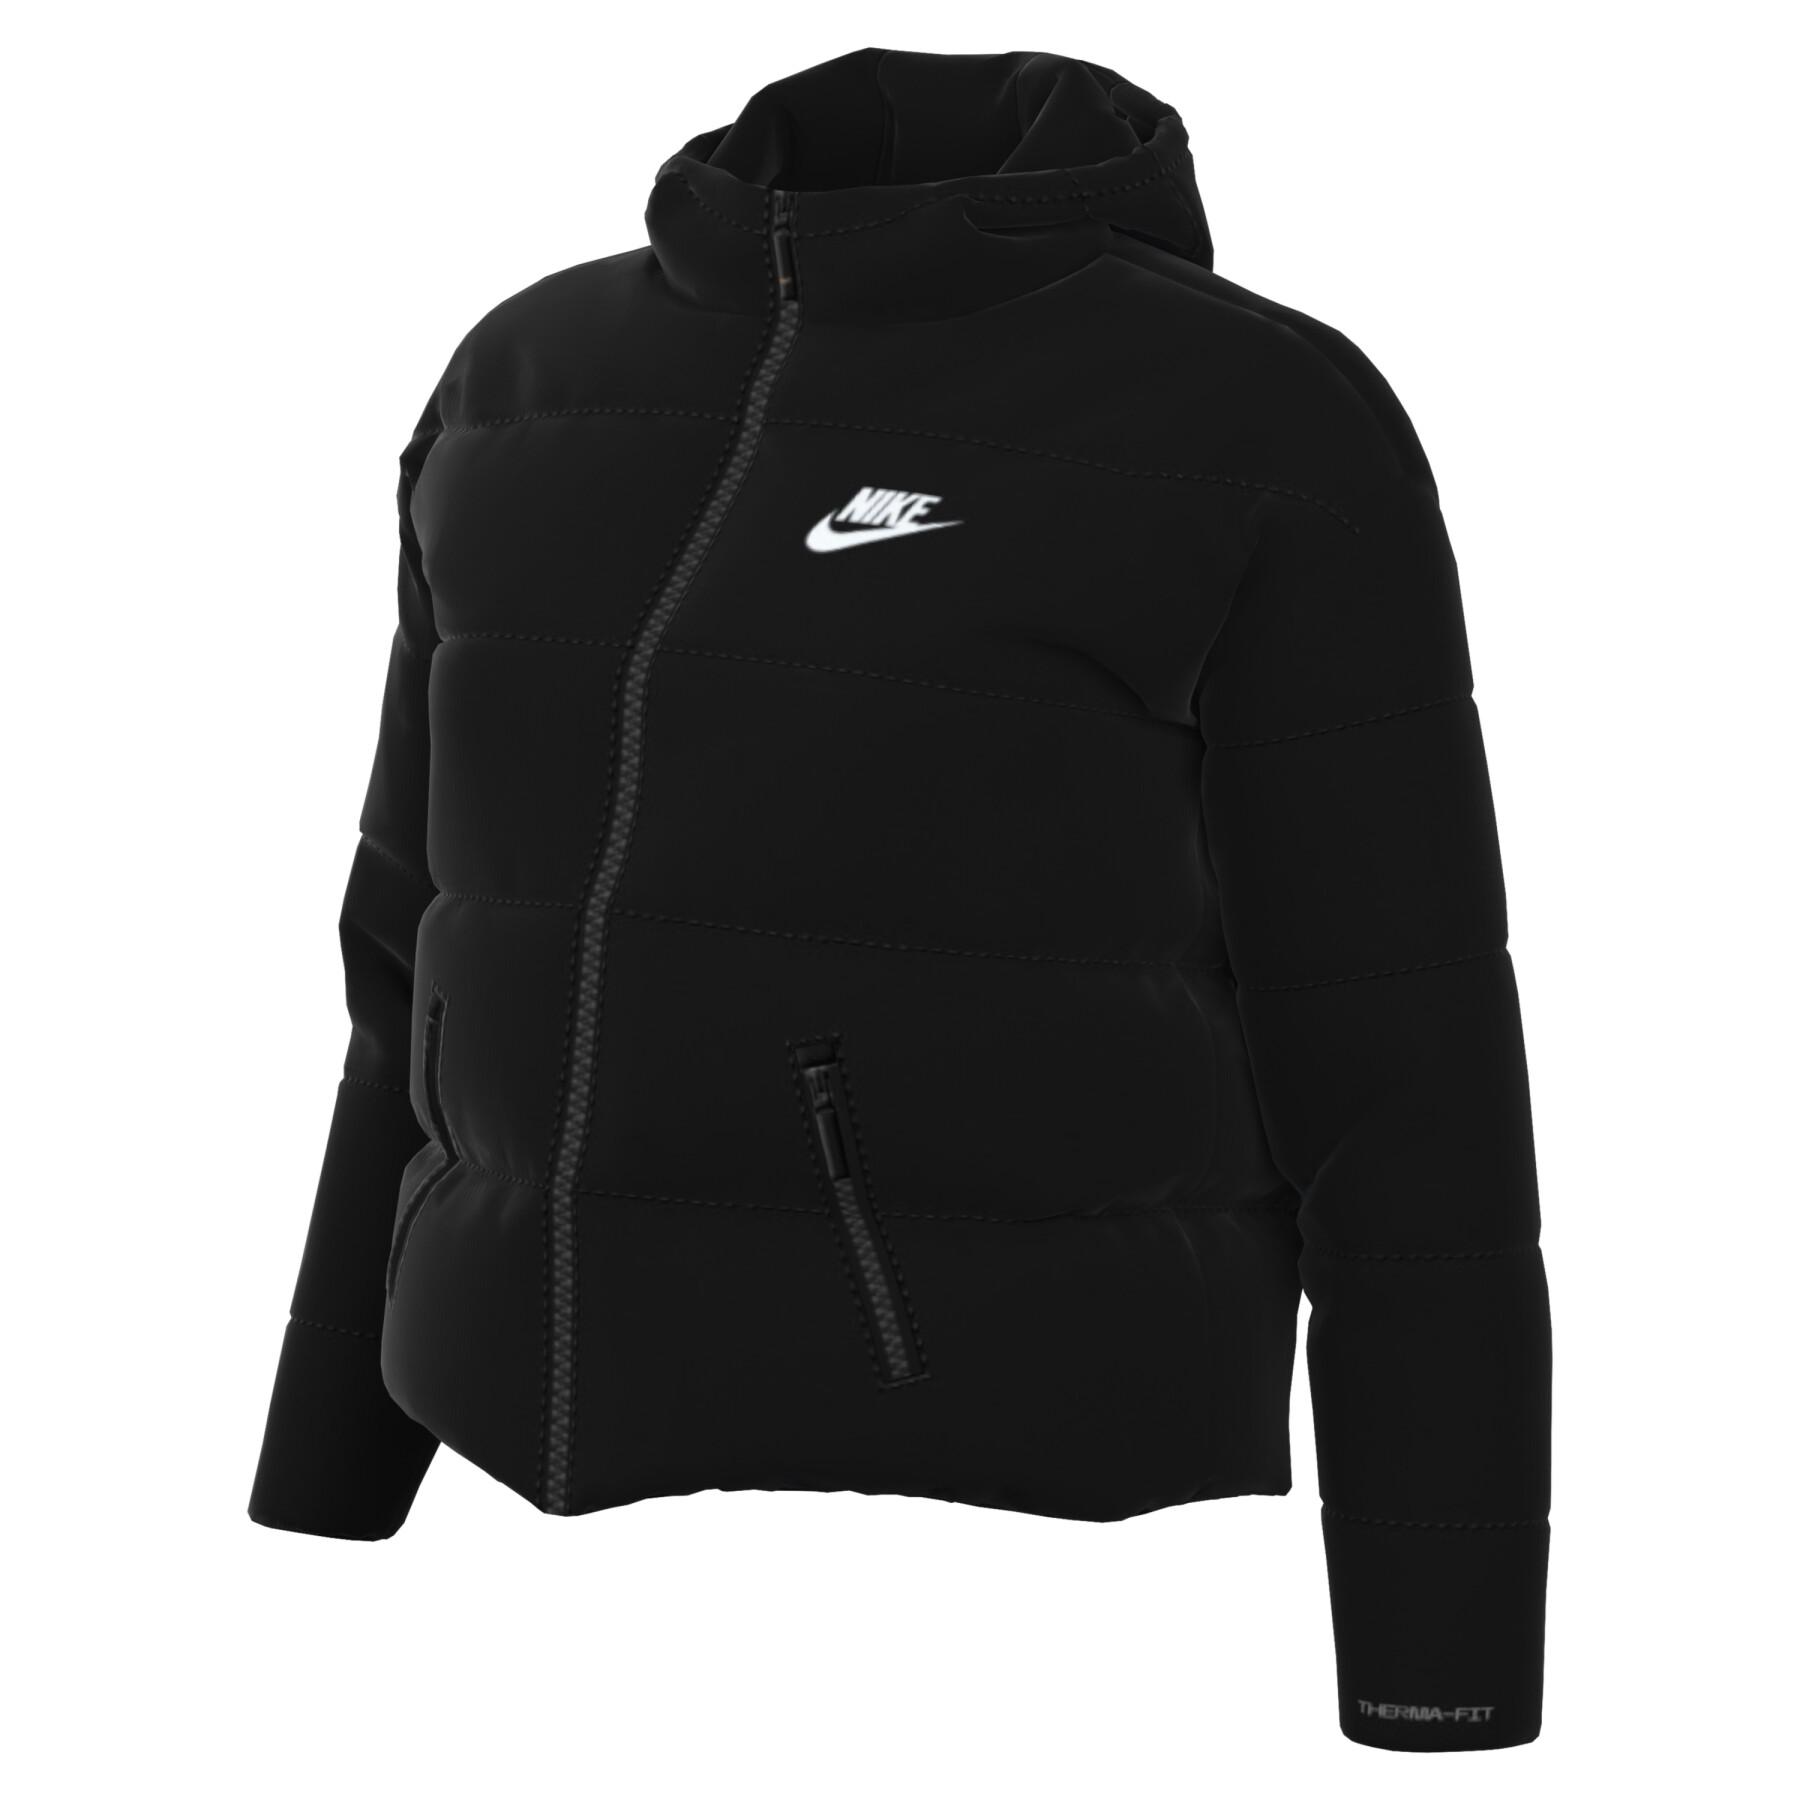 Women's down jacket Nike Sportswear Therma-FIT - Nike - Brands - Lifestyle